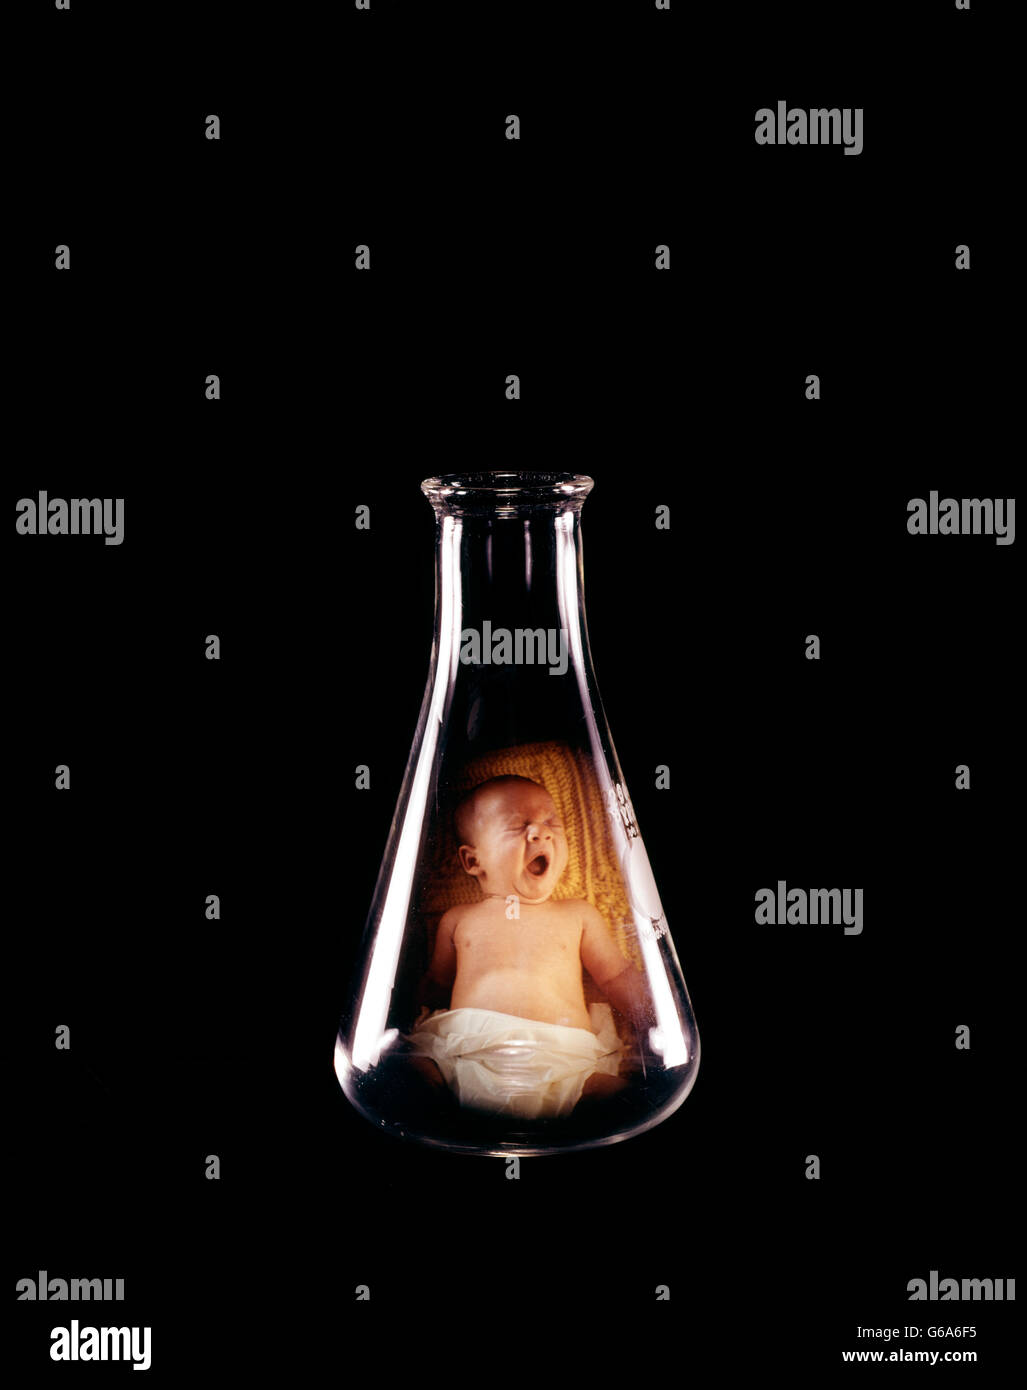 SYMBOLIC TEST TUBE BABY IN CHEMISTRY FLASK Stock Photo